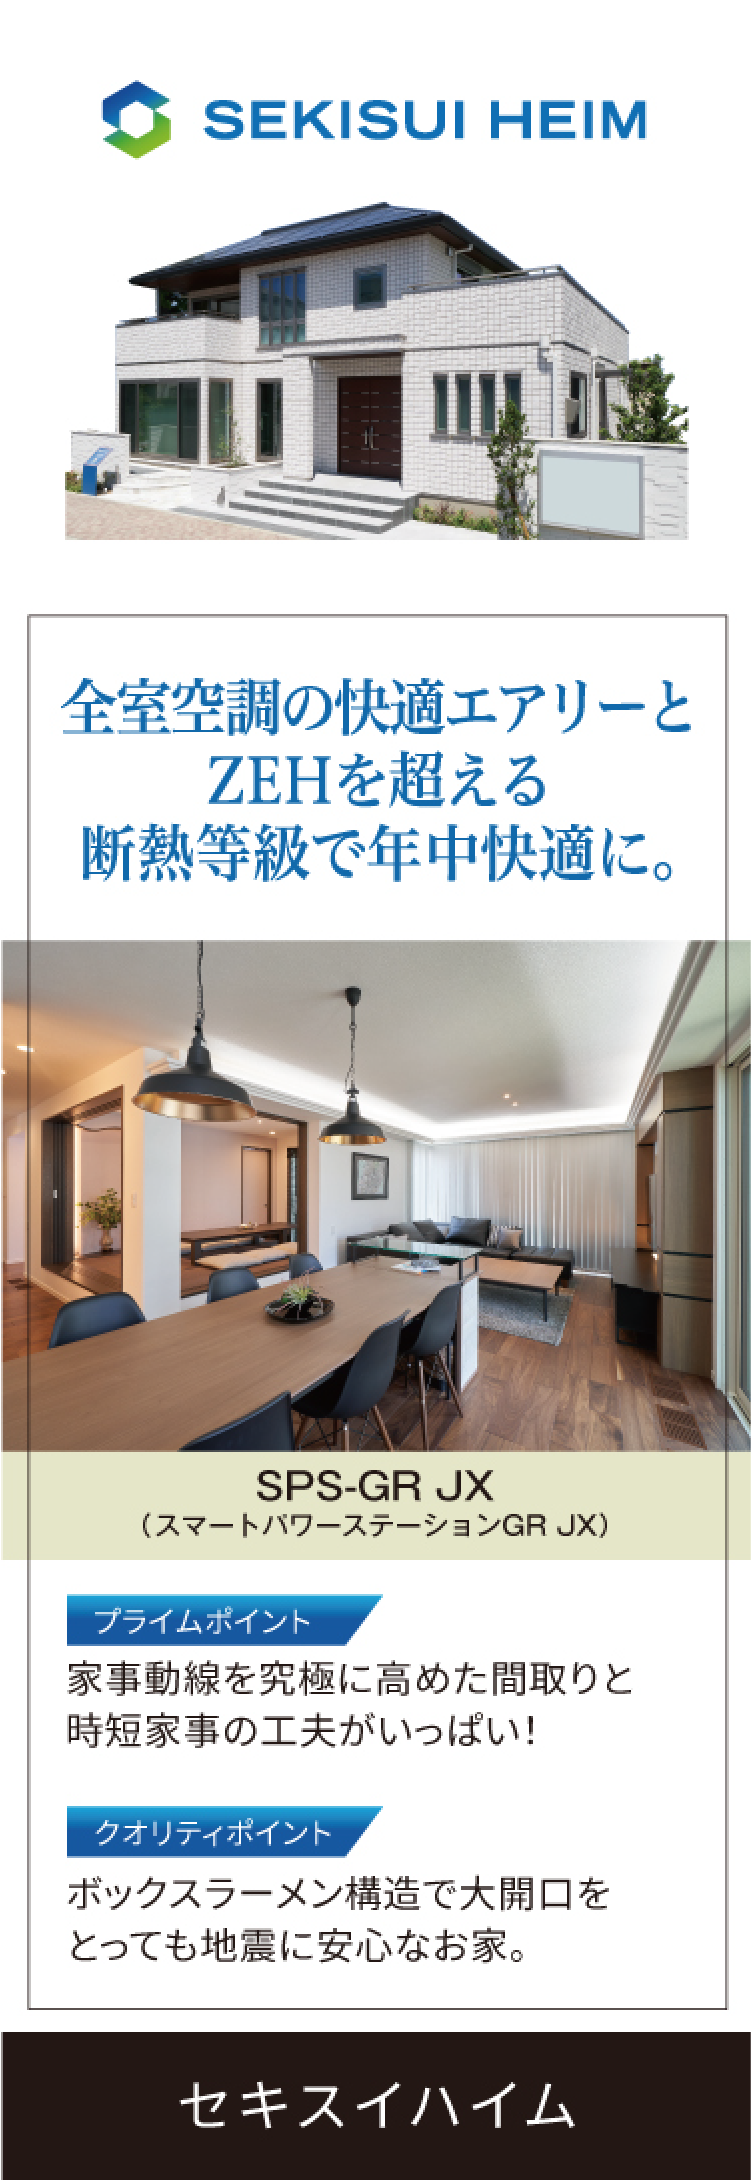 SEKISUI HEIM | 全室空調の快適エアリーとZEHを超える断熱等級で年中快適に。